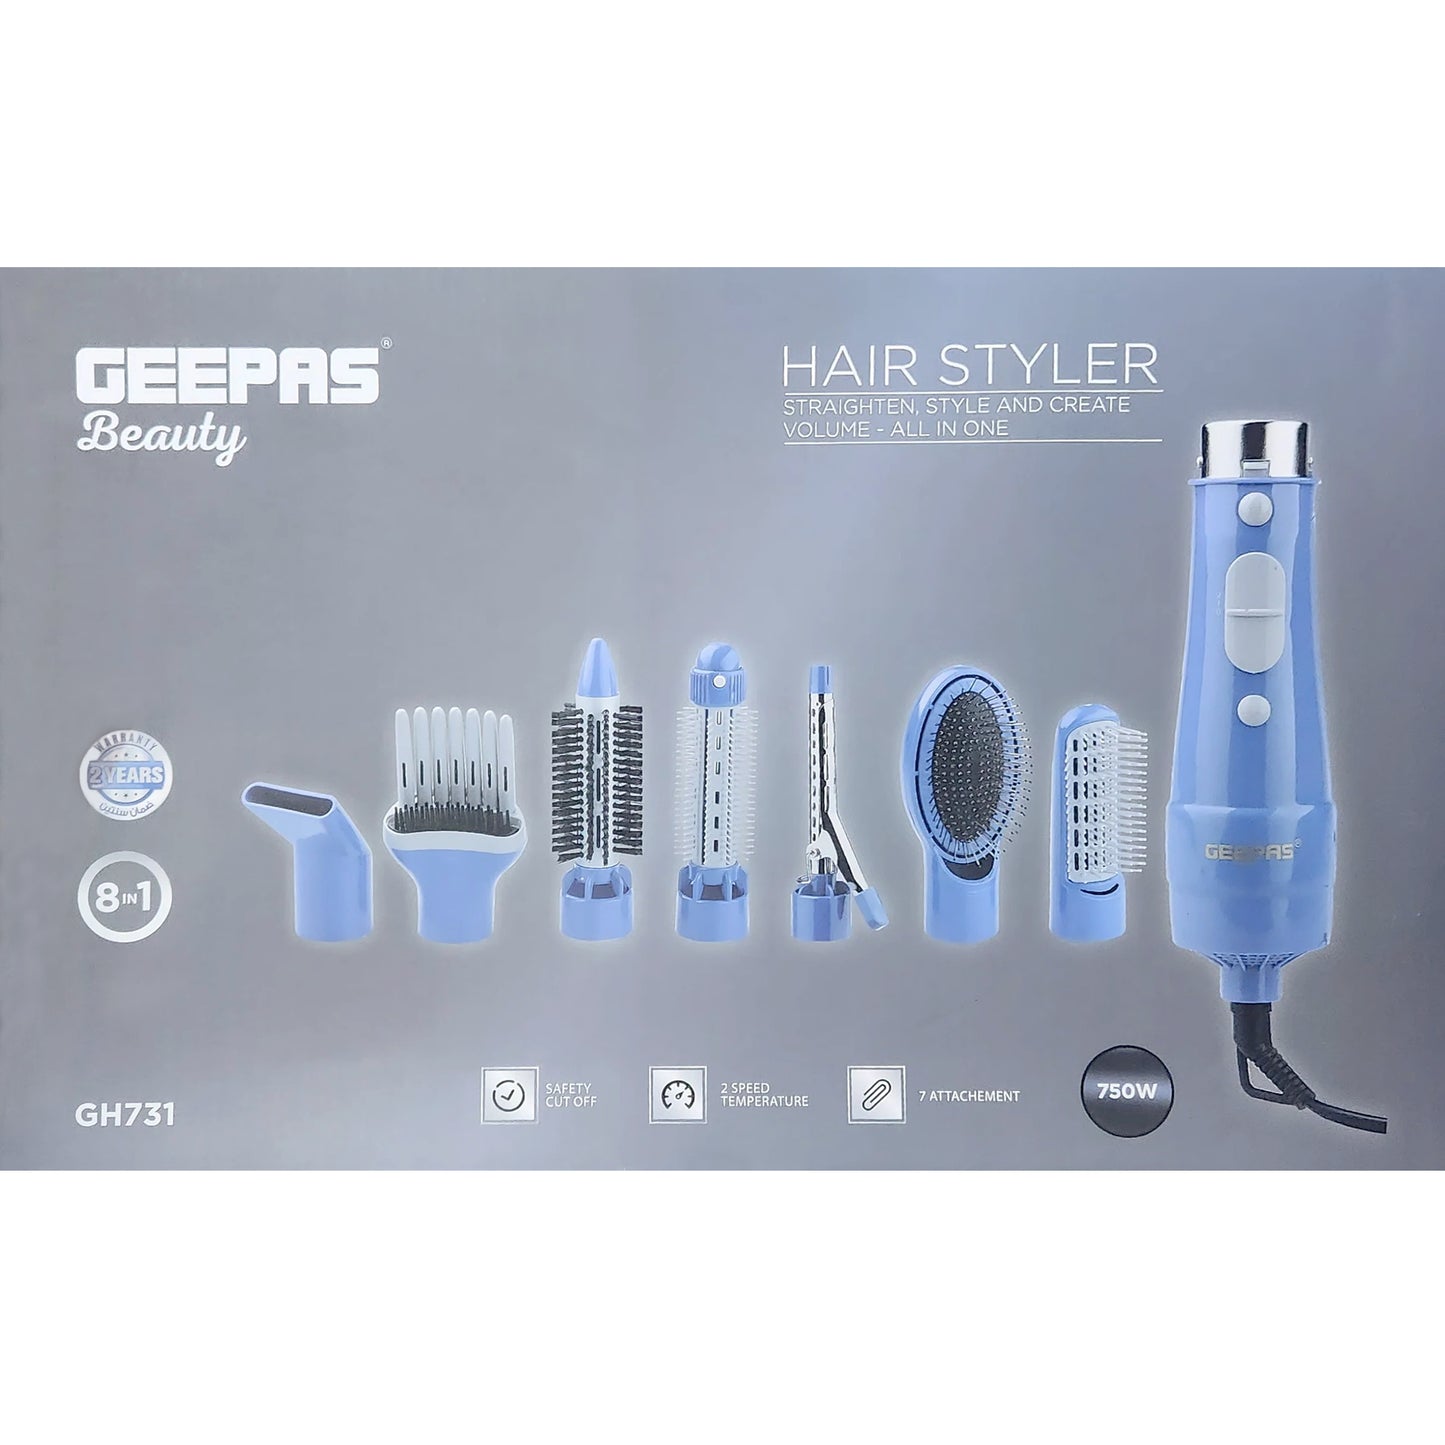 GEEPAS Salon Hair Styler - xoxopk.com